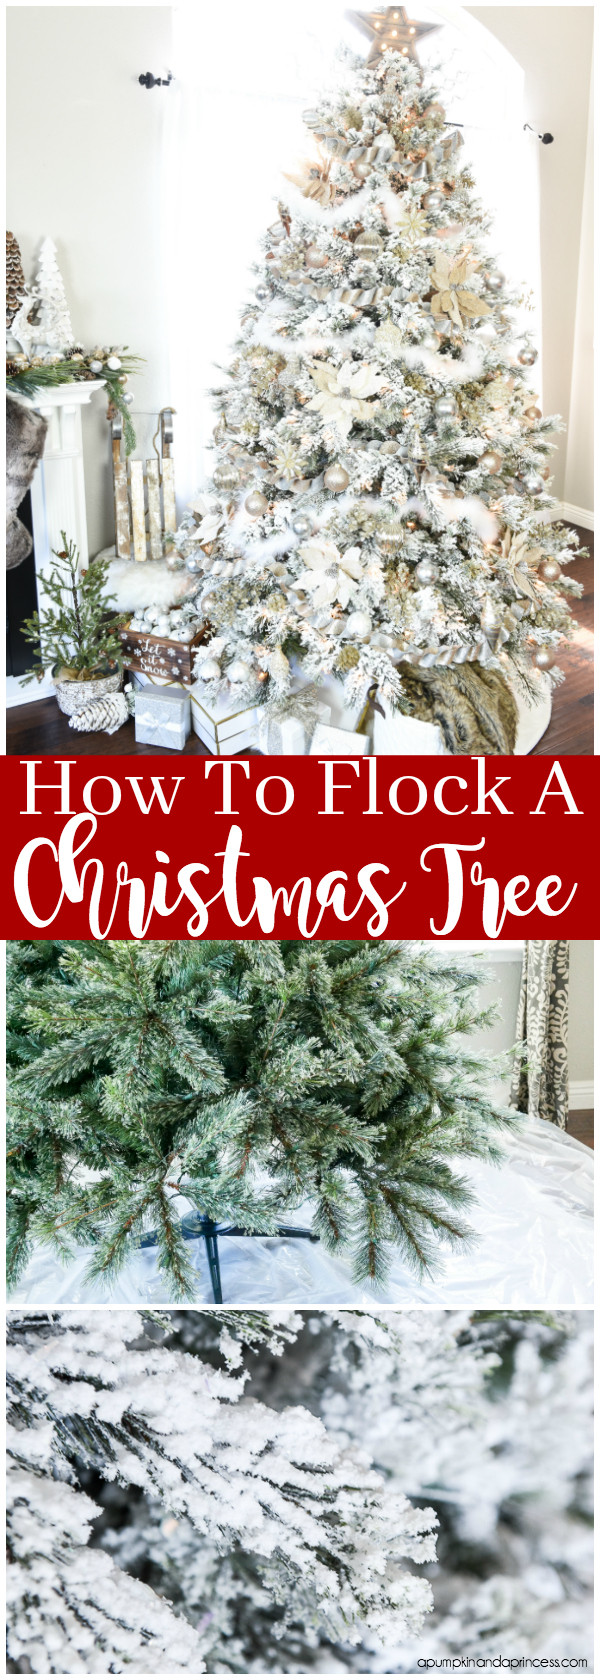 DIY Flocked Christmas Tree
 How To Flock A Christmas Tree